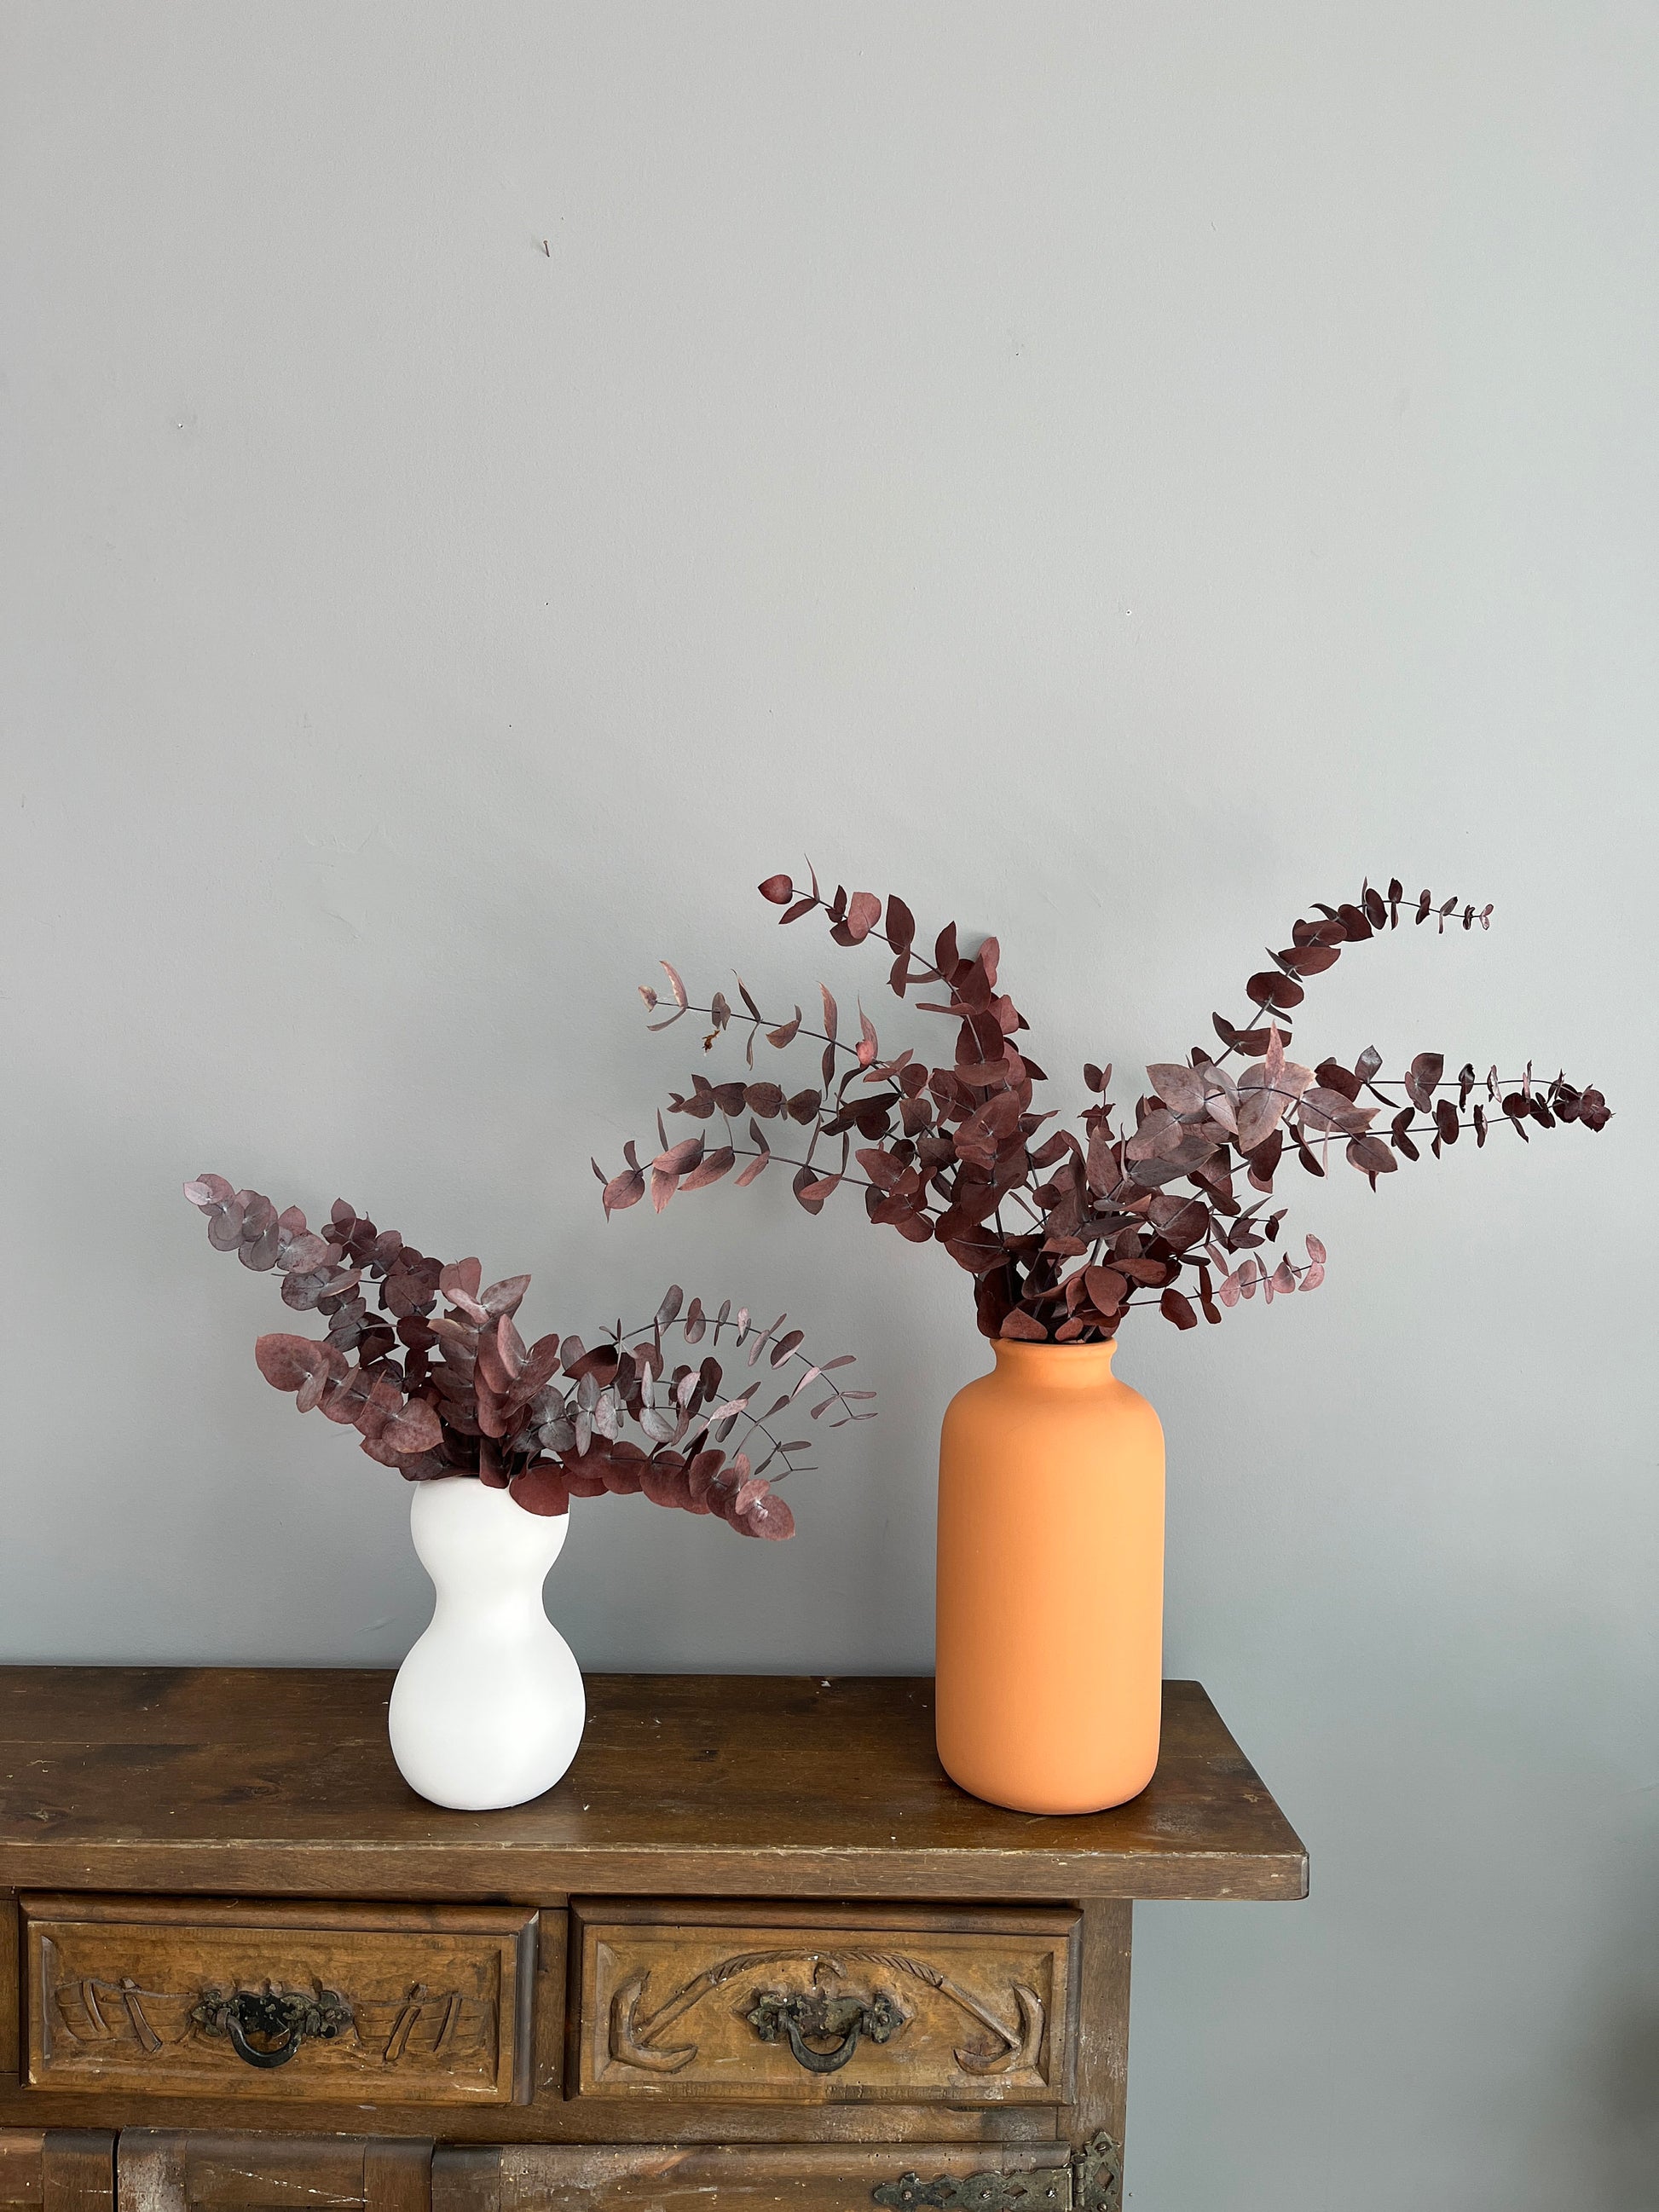 Eucalyptus in a vase, Vase arrangement, Dried flowers bouquet in a vase, Dried flowers bouquet, Boho decor, Table decor, Fall decor